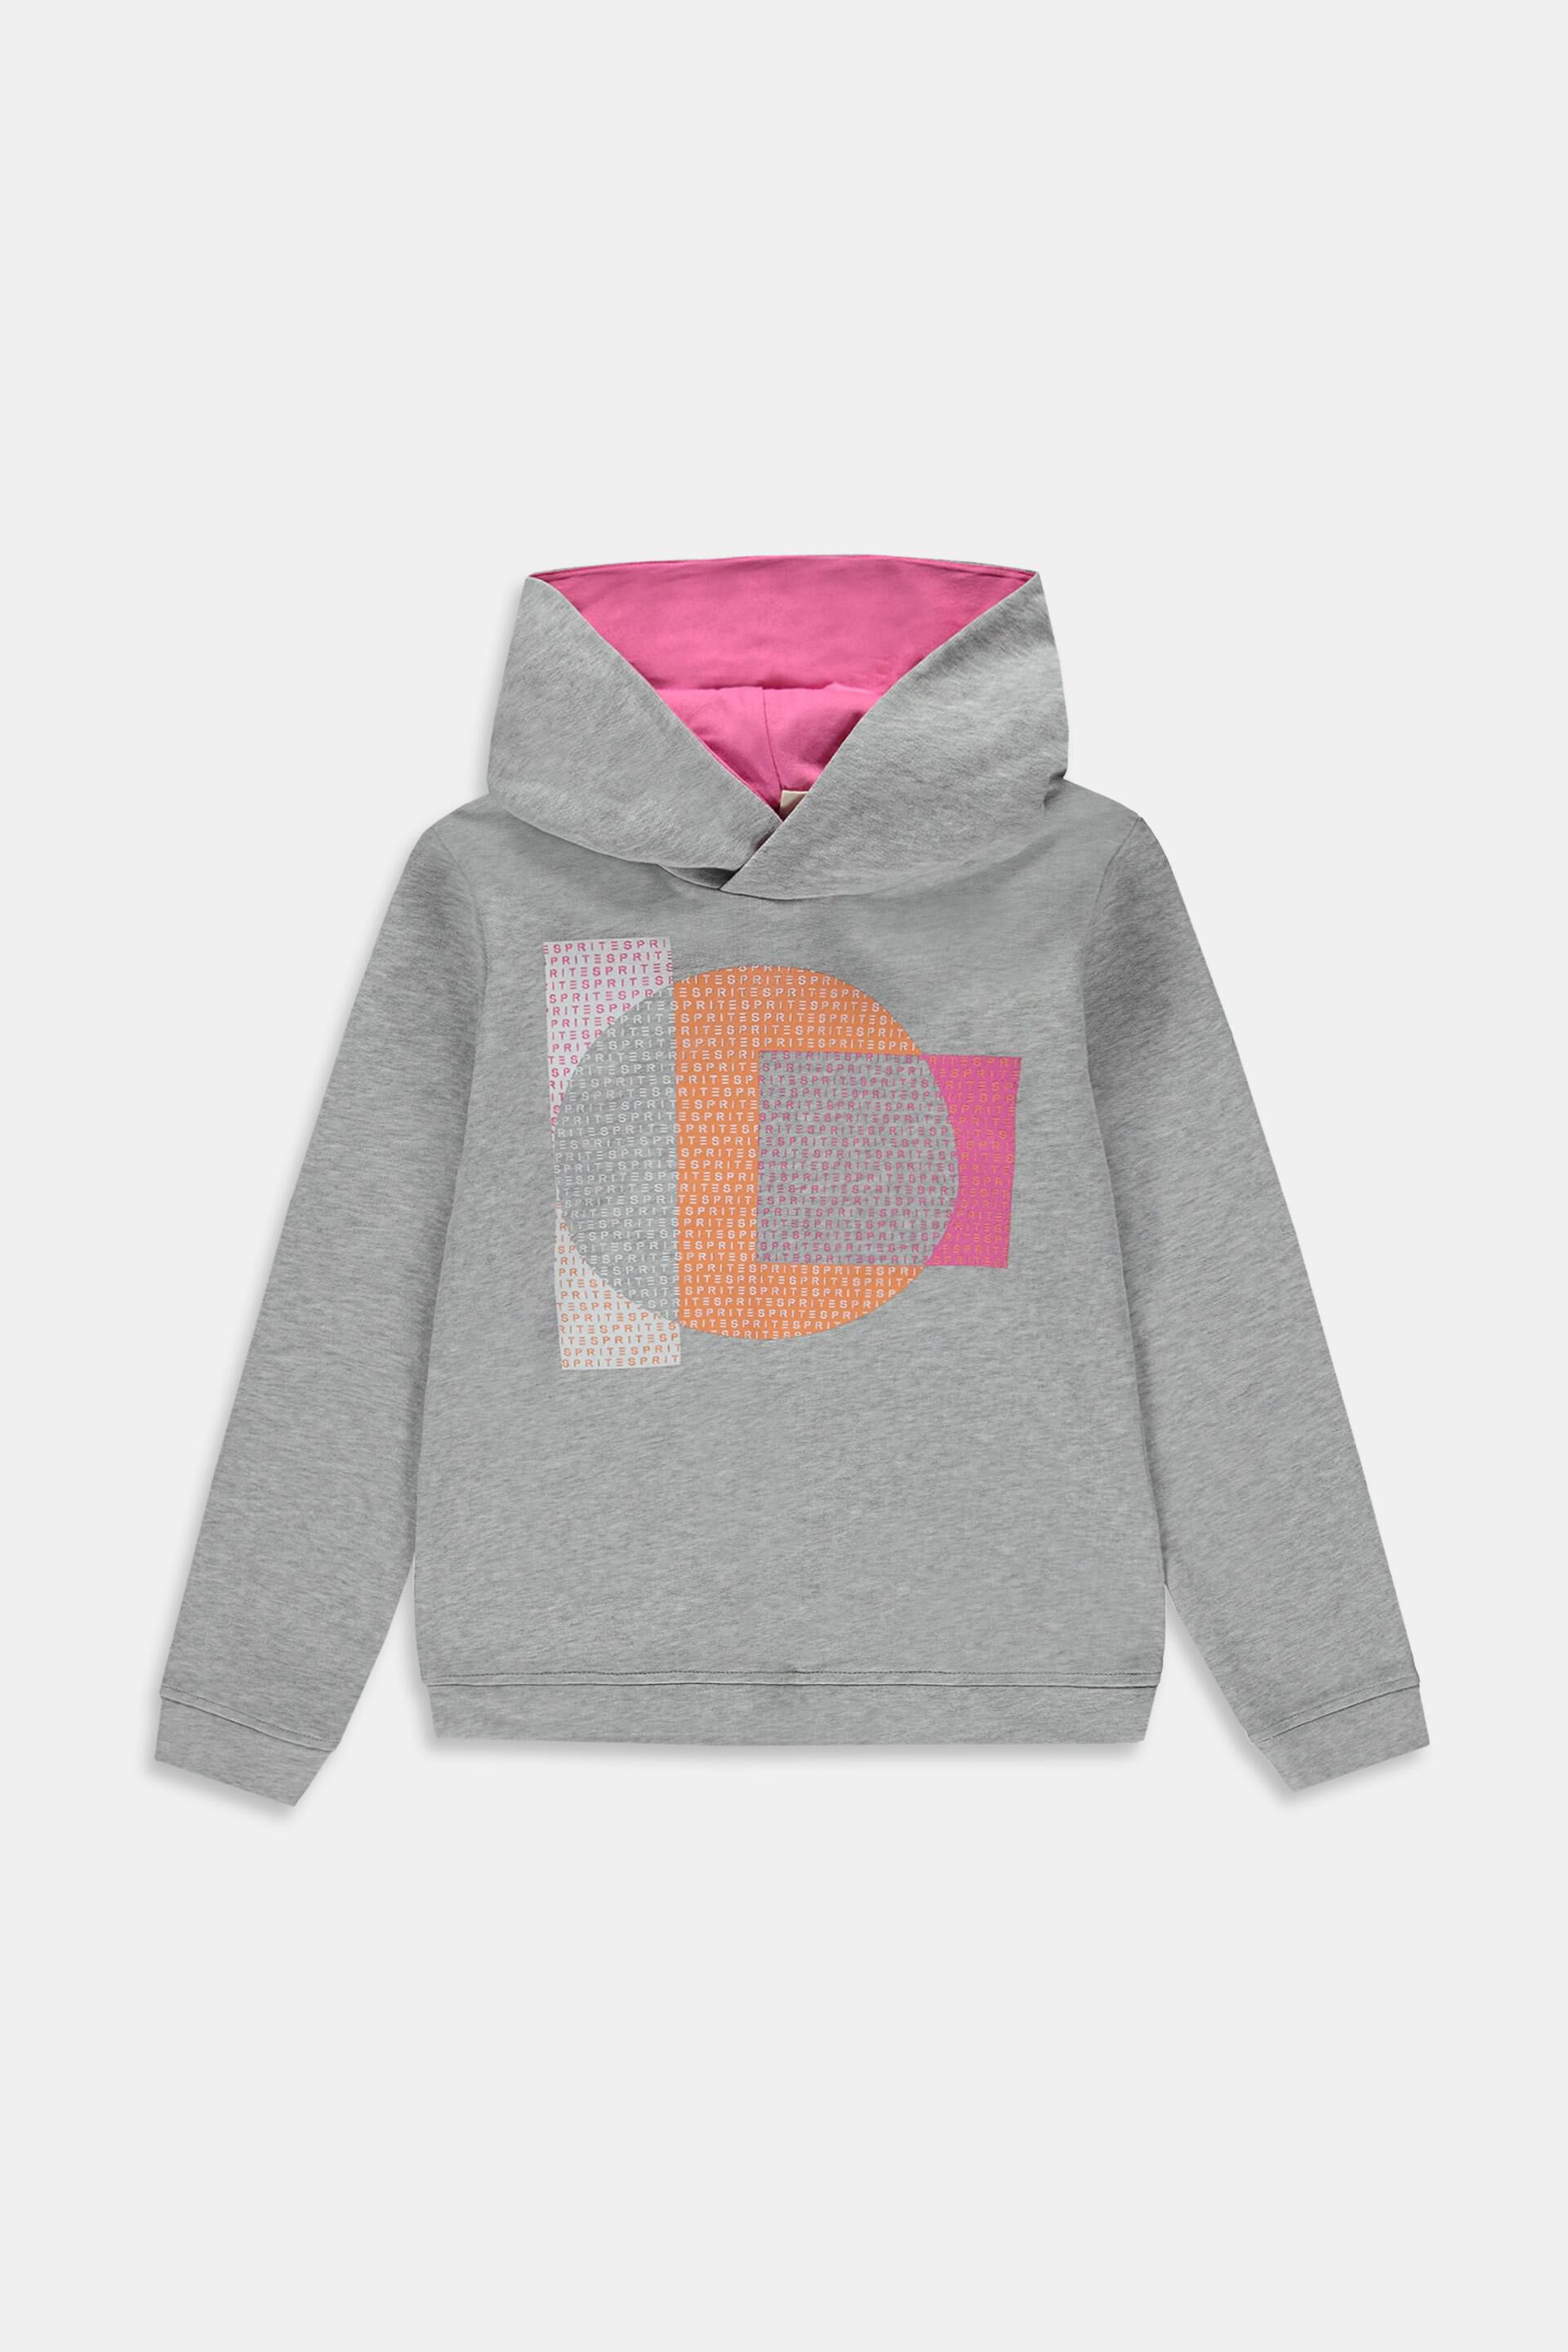 Esprit print on Cotton chest geo hoodie with